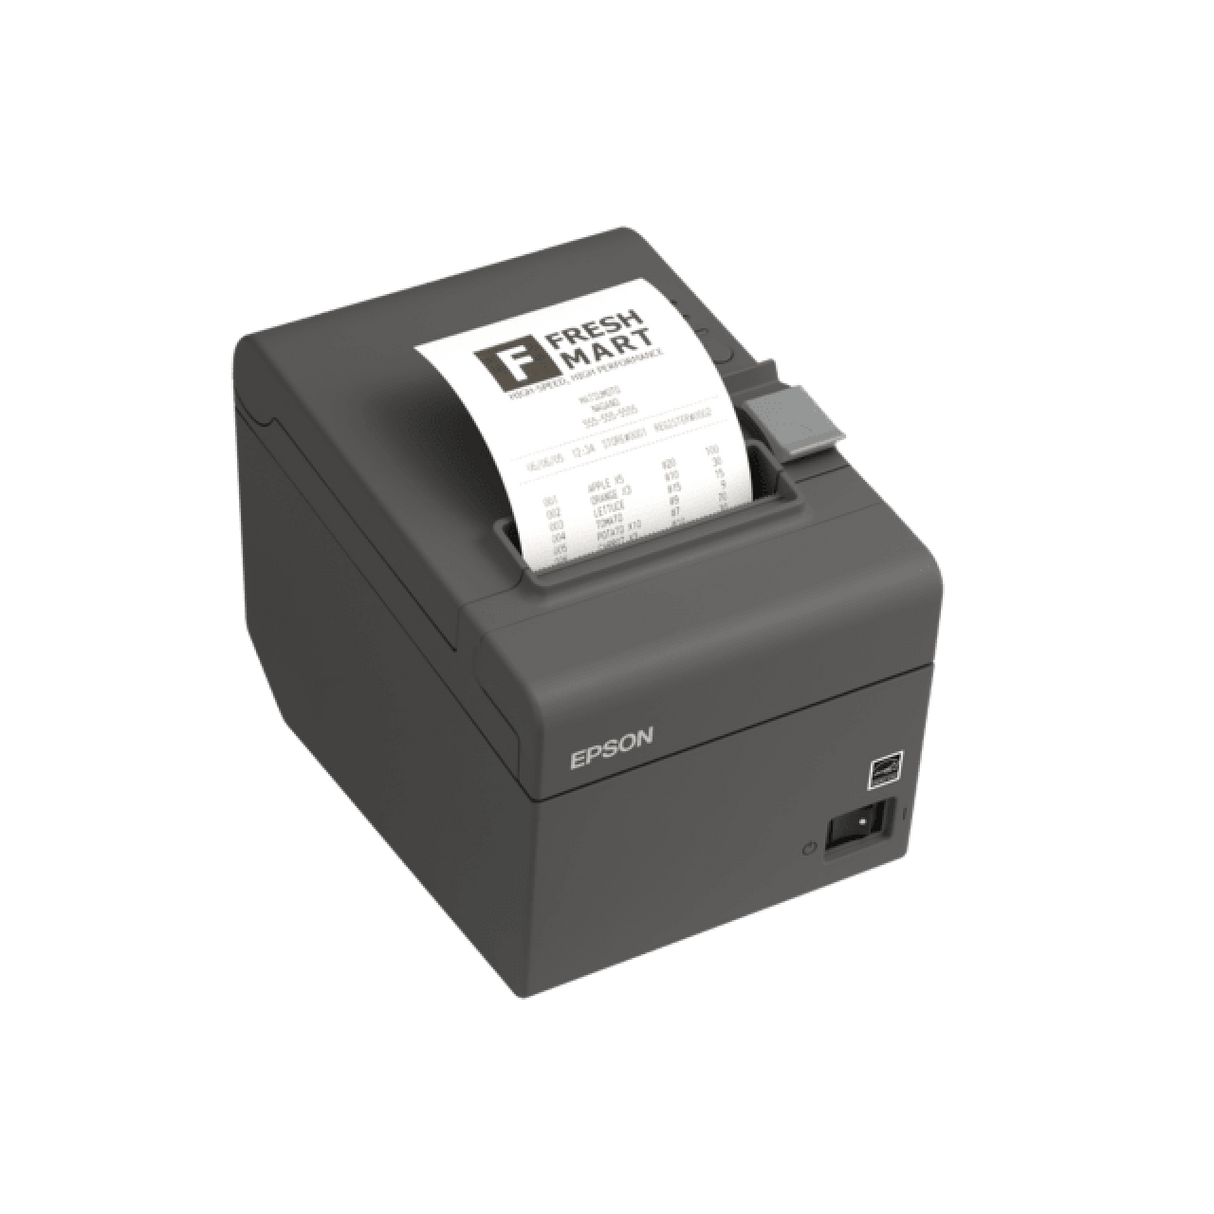 Epson TM-T20III, Reino Unido, USB, RS232, 8 puntos/mm (203 ppp), cortador, ePOS, negro